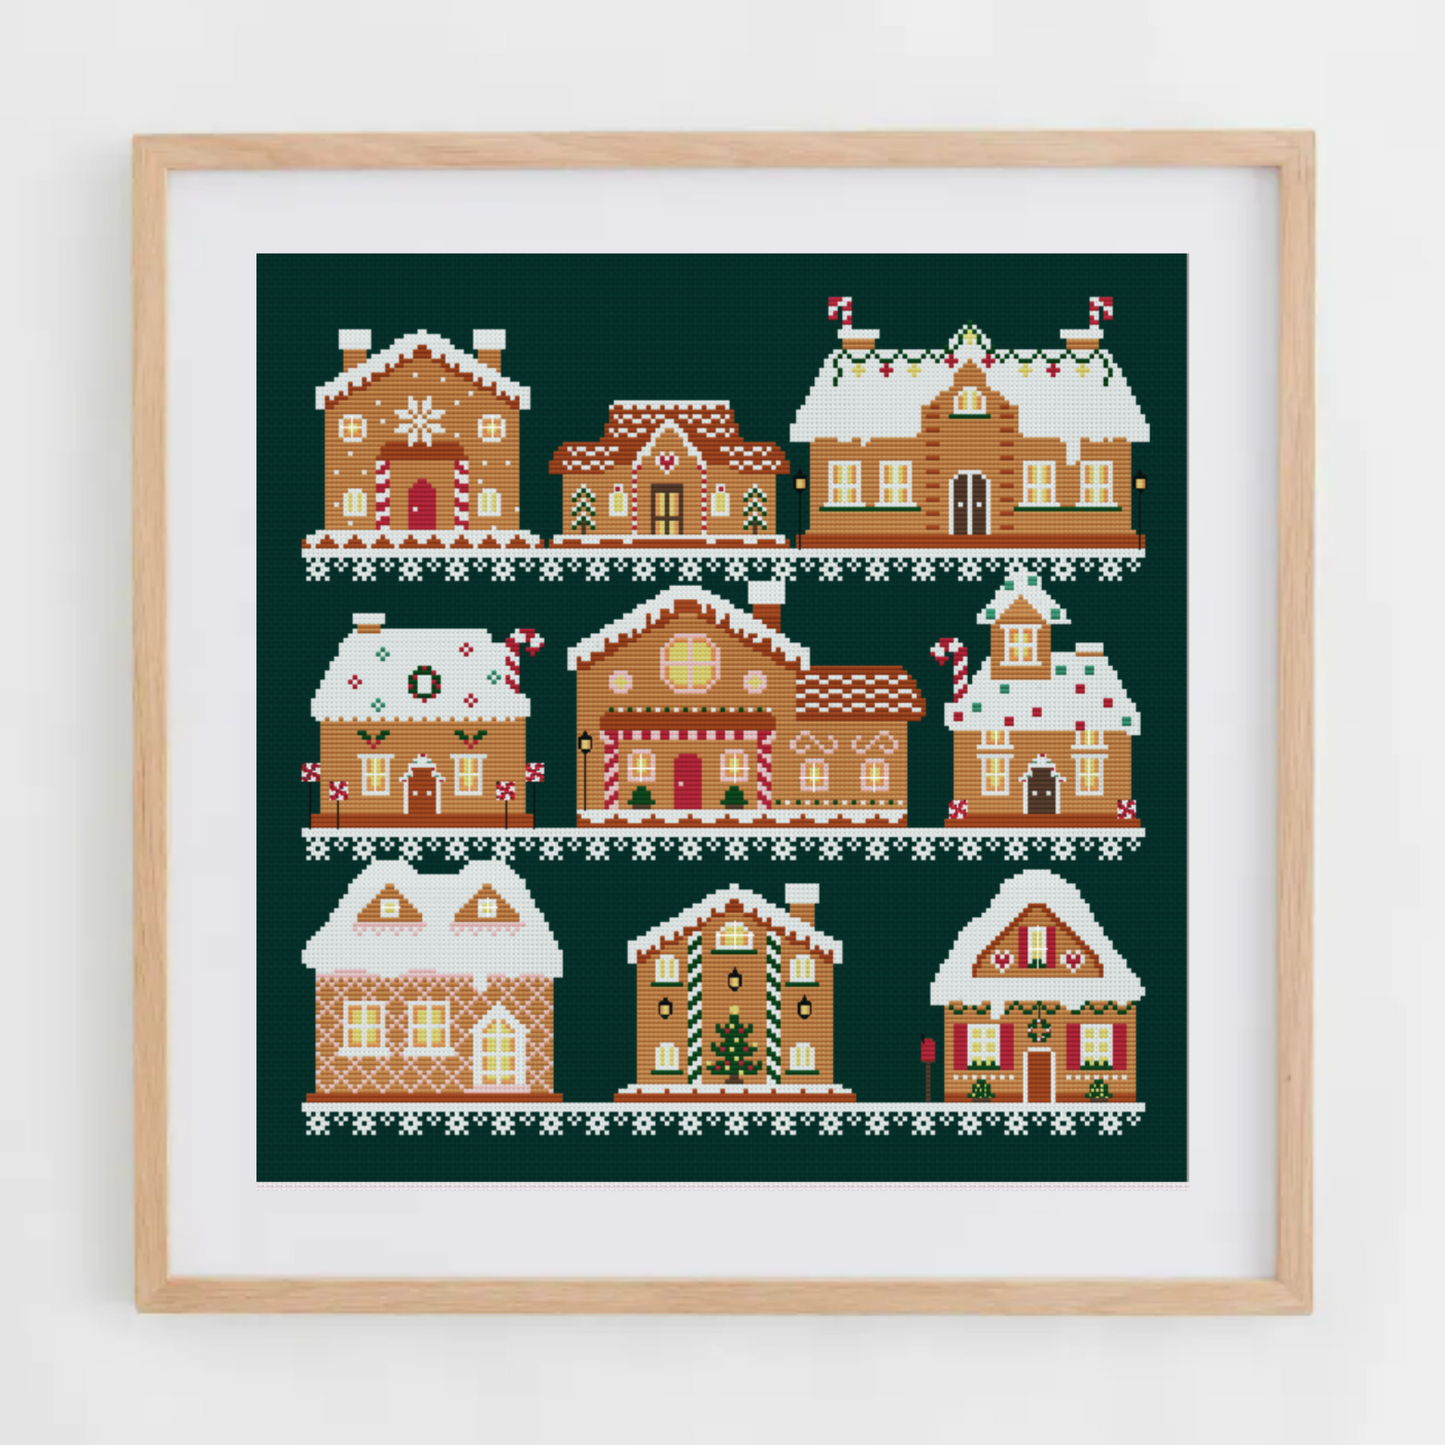 Gingerbread Houses Cross Stitch Patterns | Christmas Cross Stitch Chart With Gingerbread | Xmas Cross Stitch Ideas 